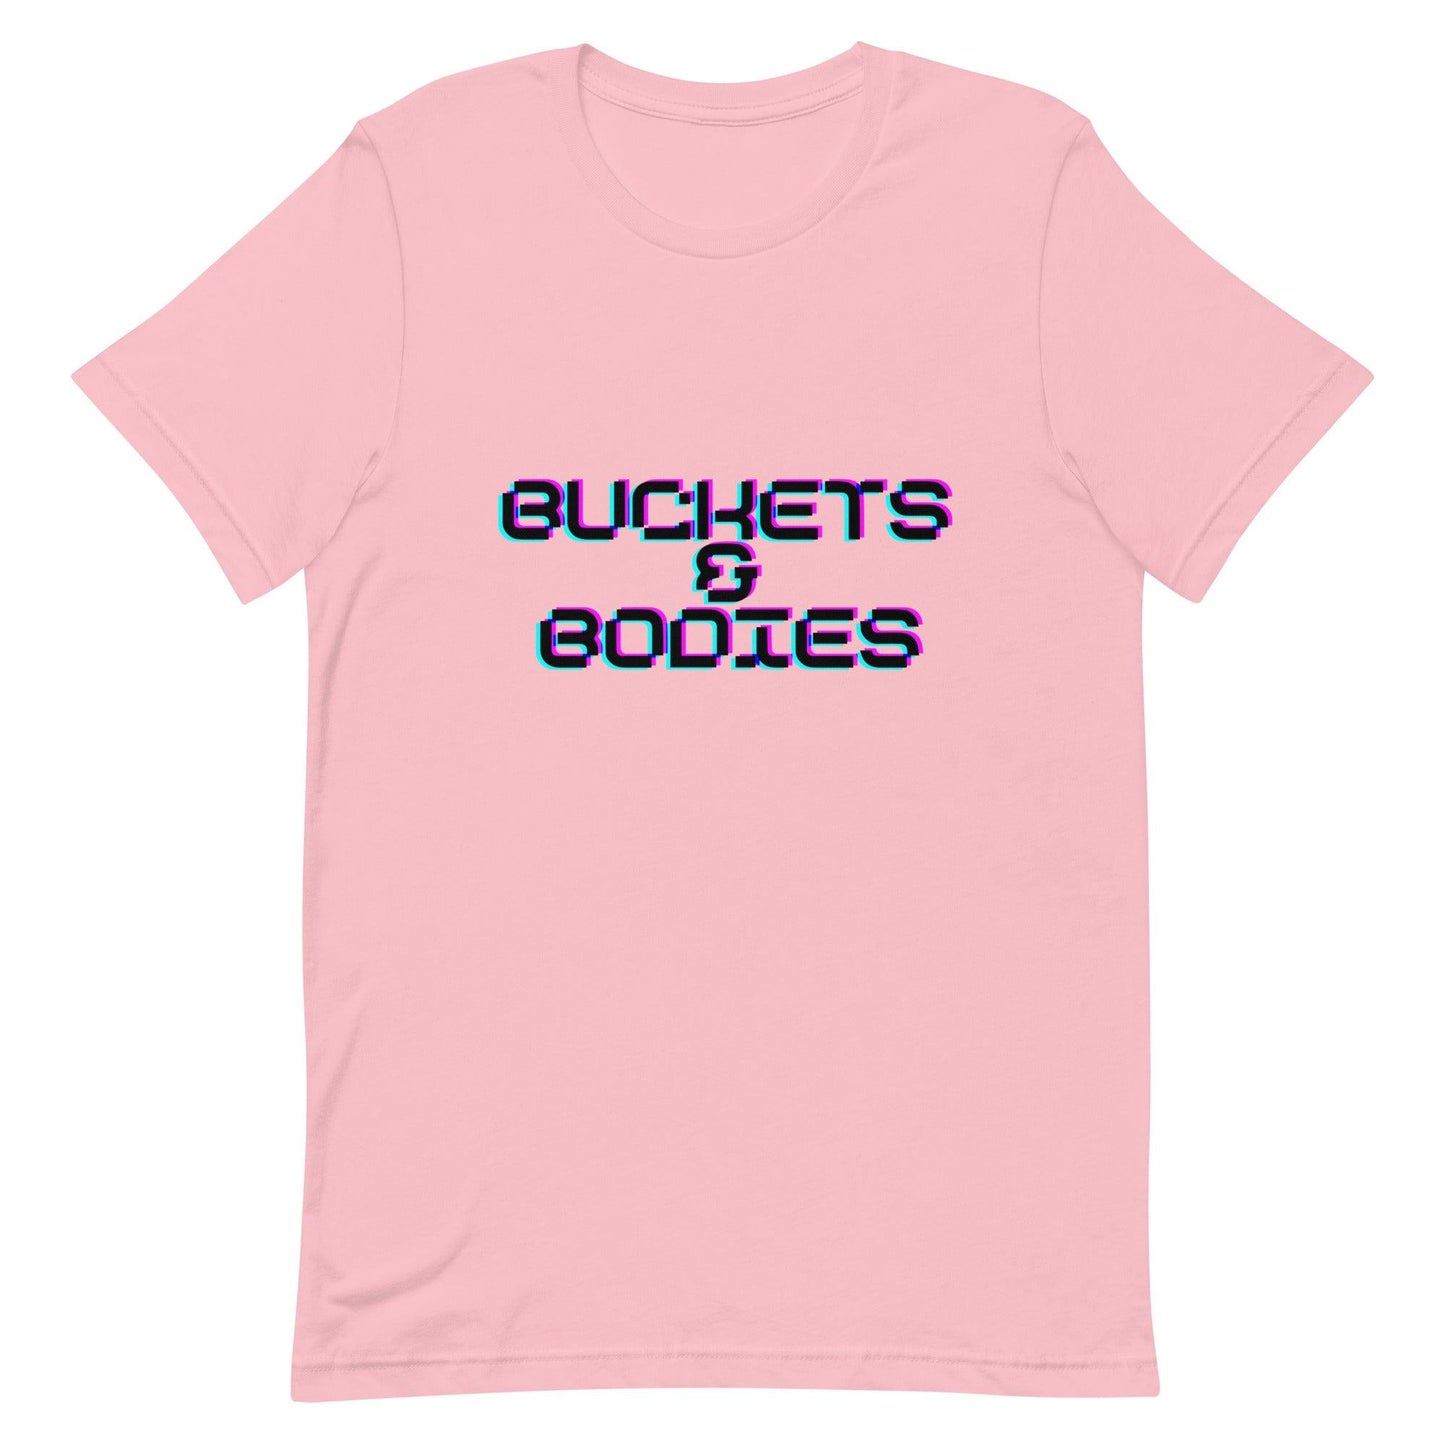 Angelo Sharpless "Buckets & Bodies" t-shirt - Fan Arch